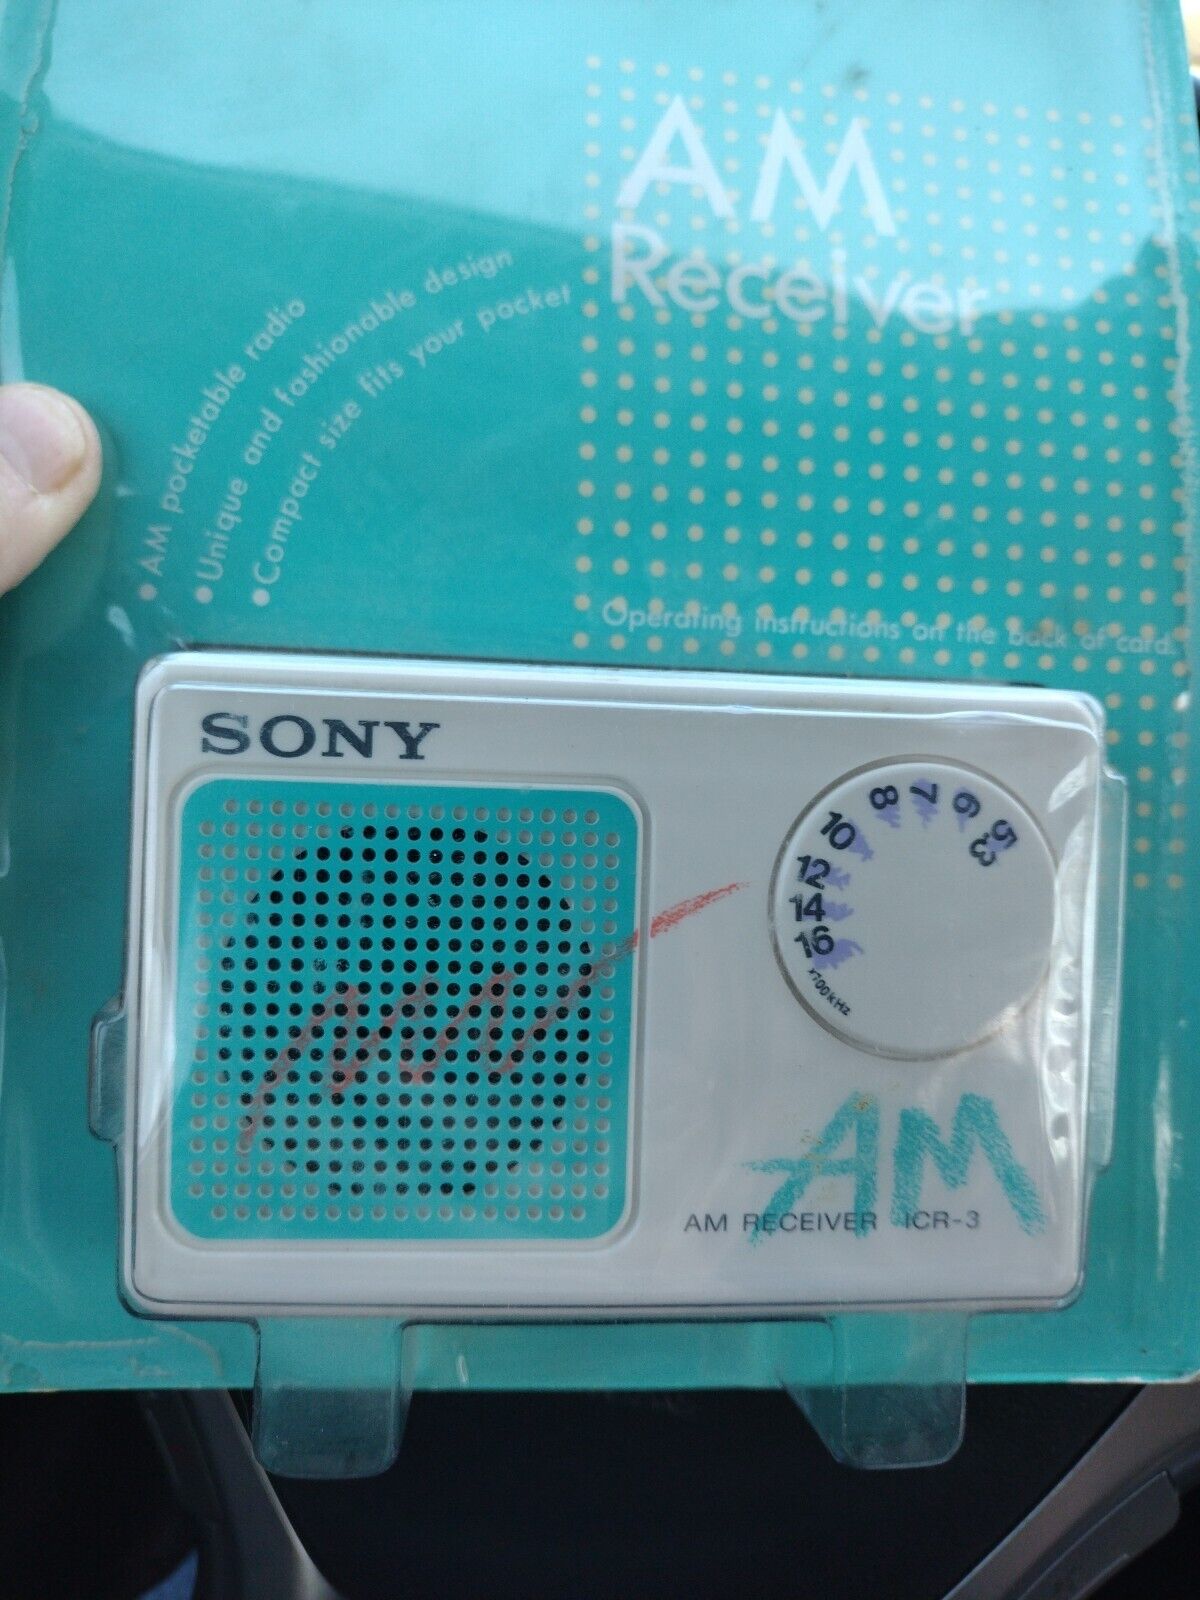 1980s NOS Sony ICR-3 AM Receiver Pocket Compact Radio X10kHz Vintage Handheld